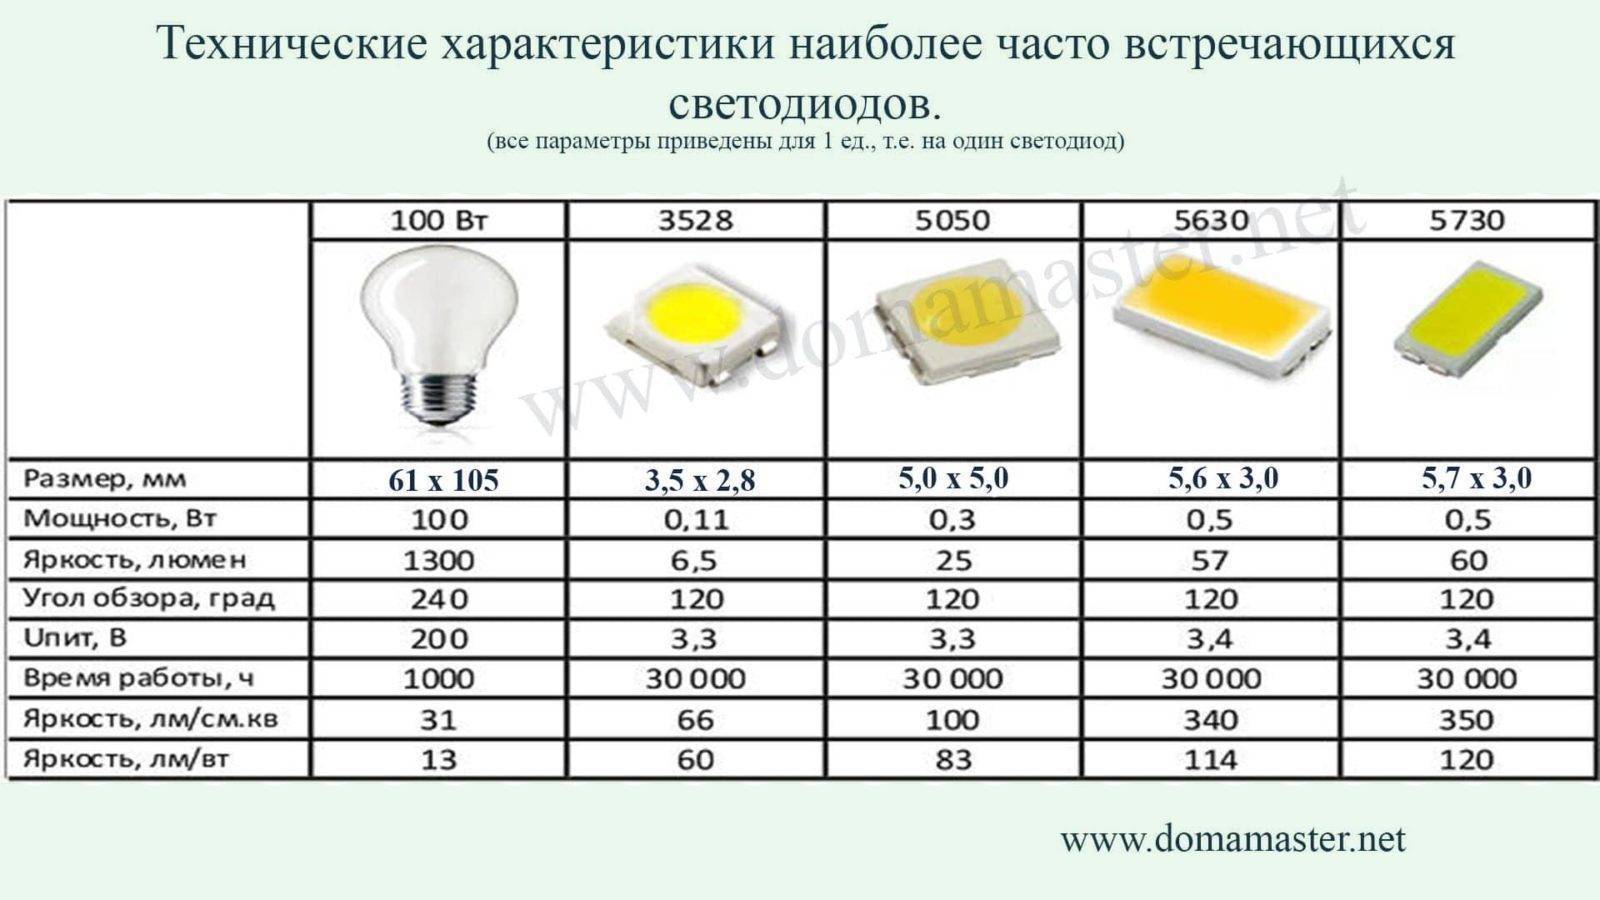 Люмен - единица измерения светового потока, сколько люмен в лампе 100 ватт